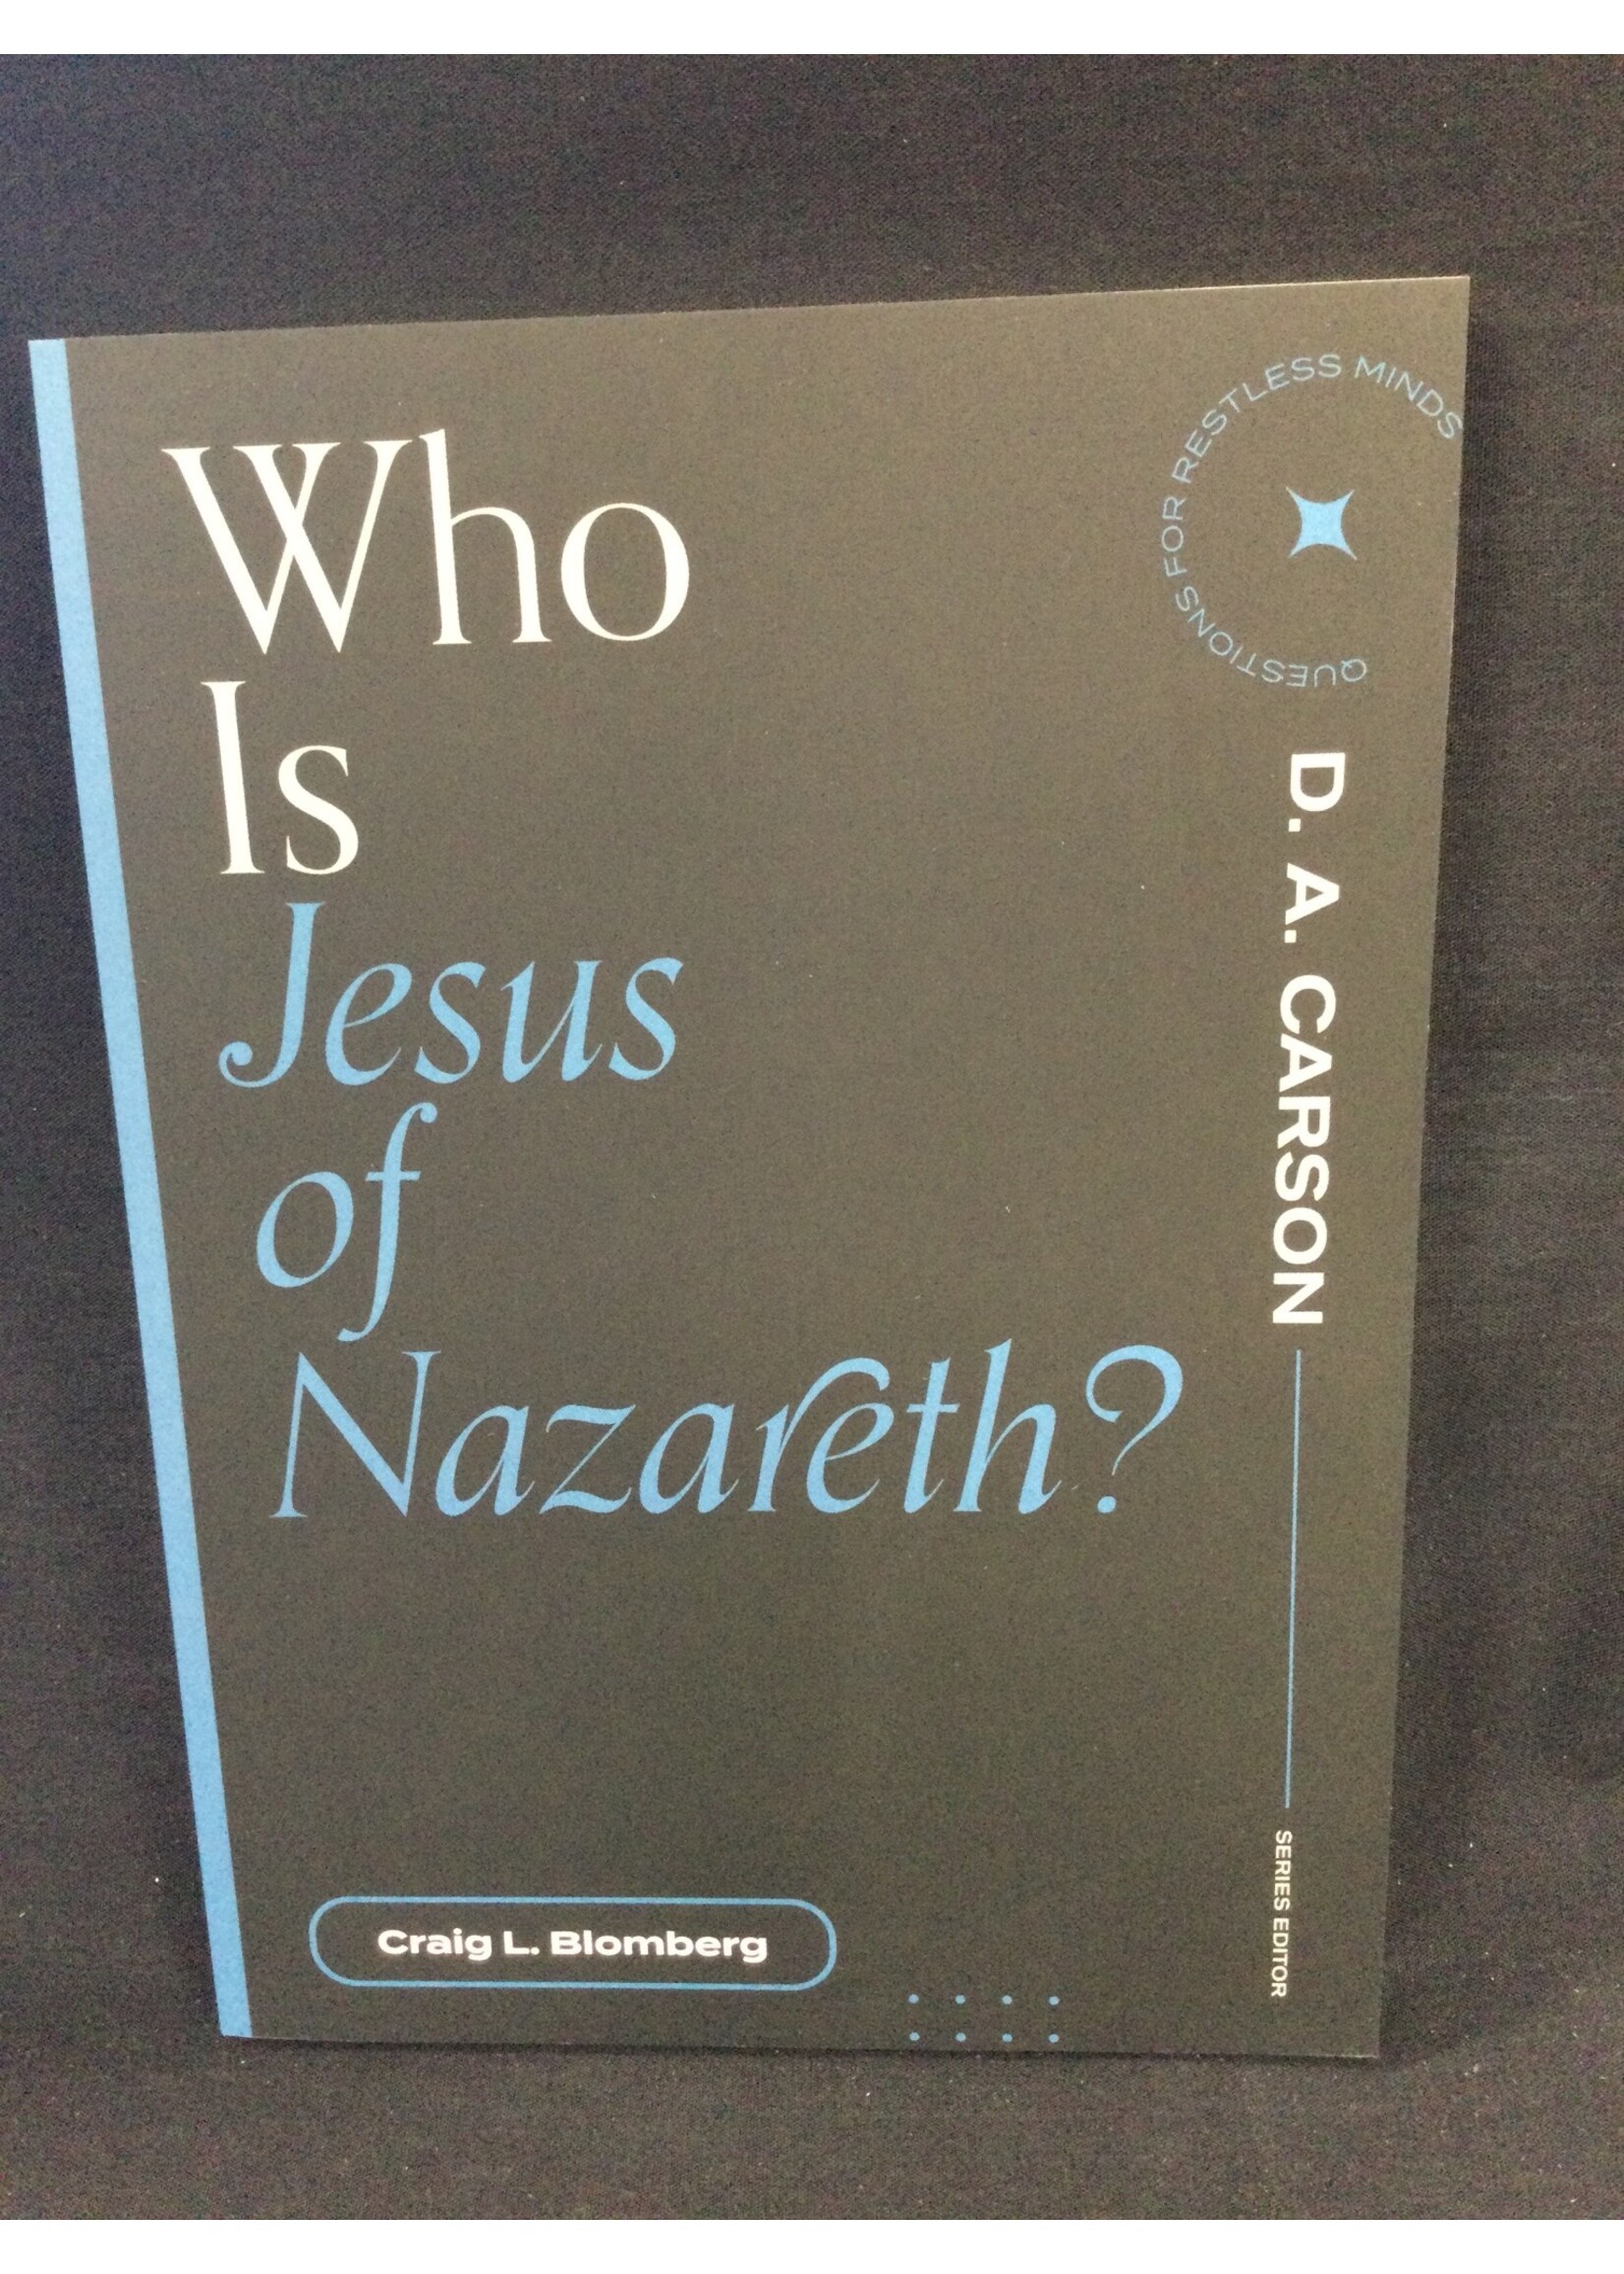 WHO IS JESUS OF NAZARETH